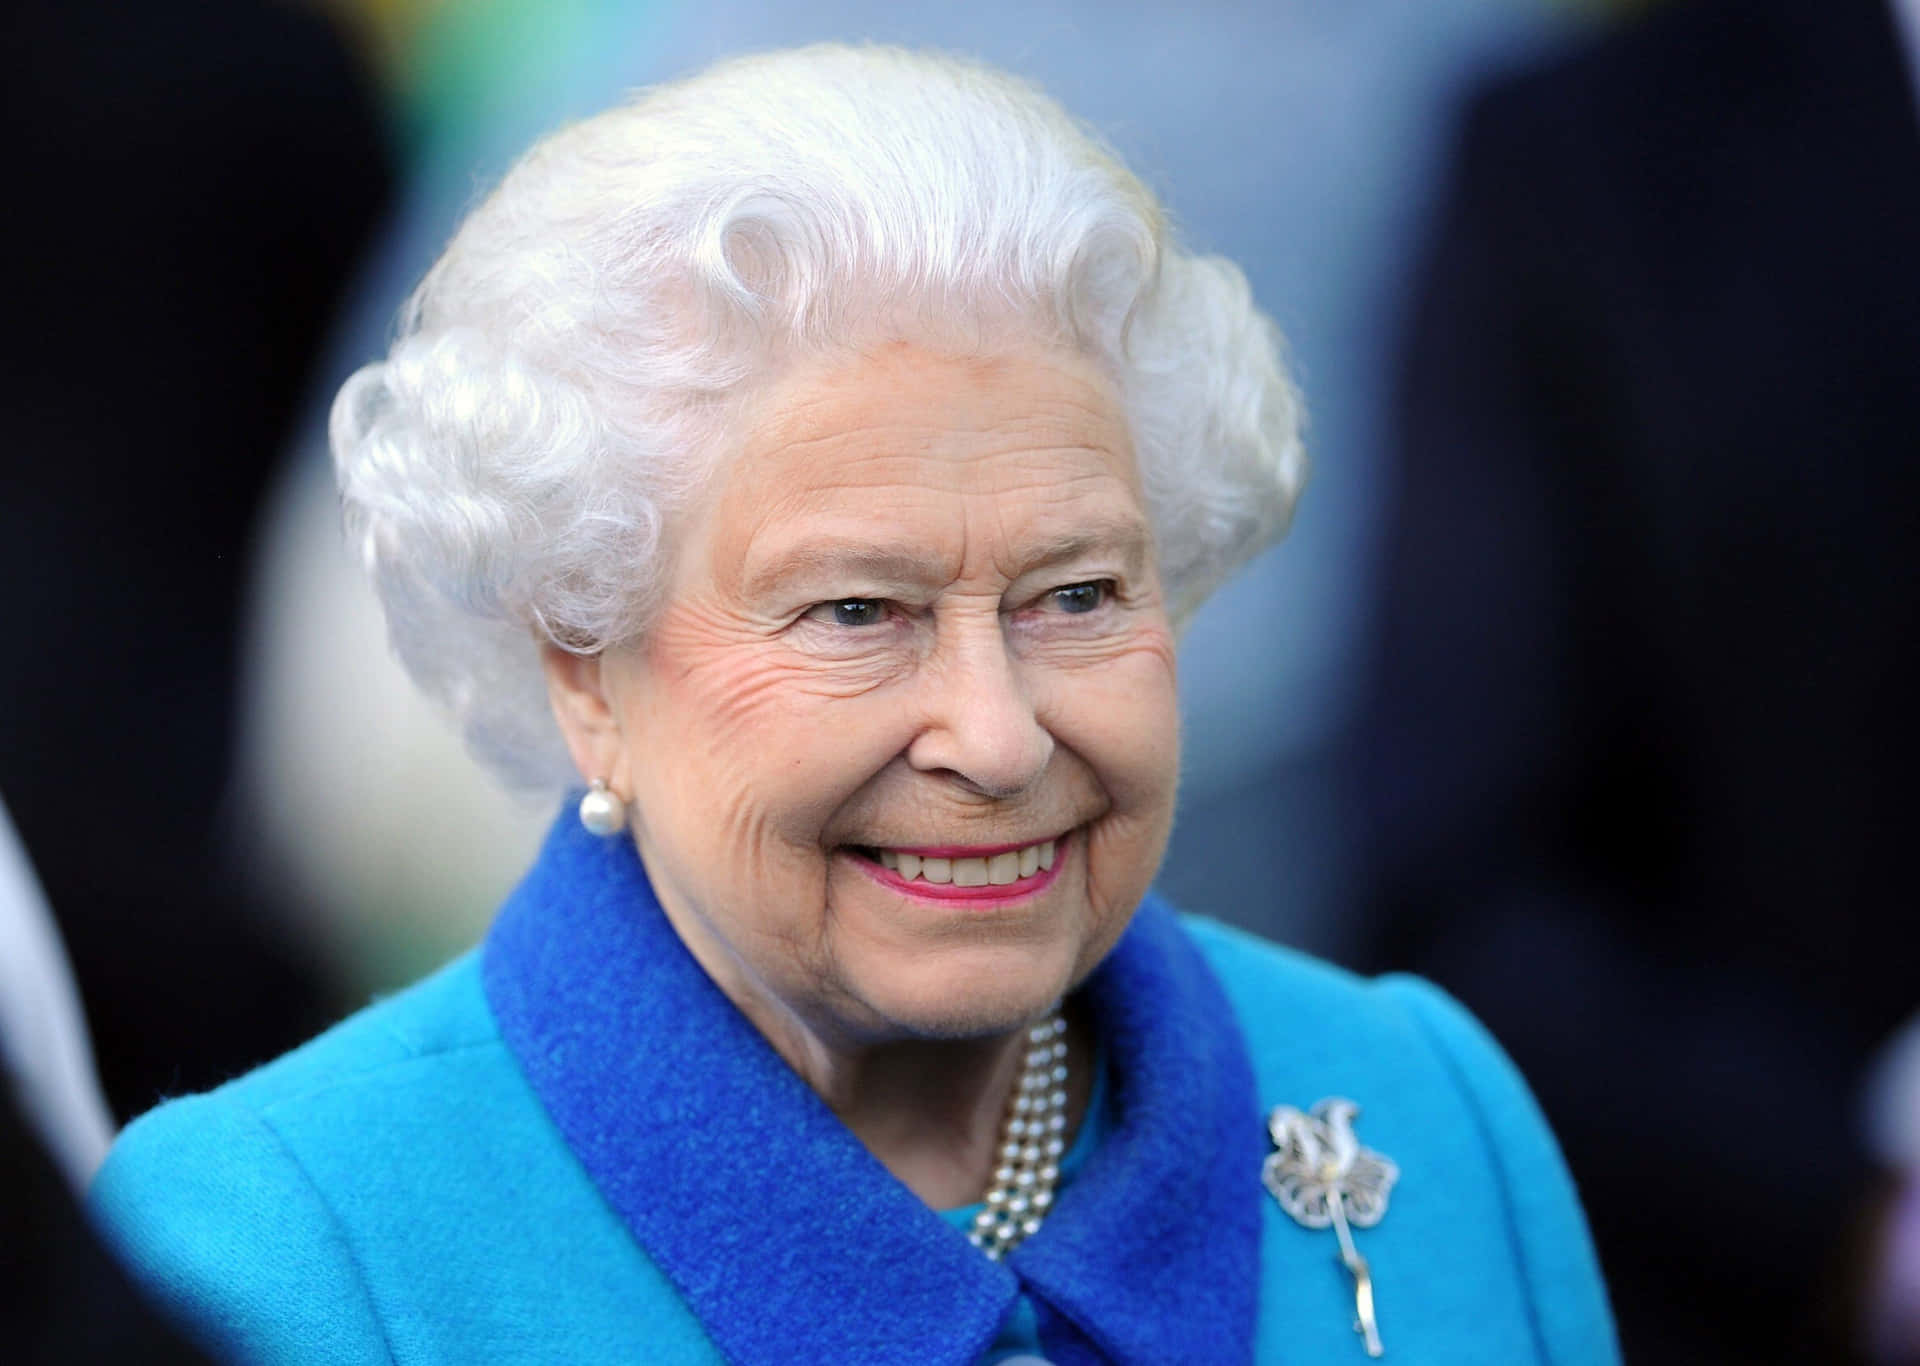 Her Majesty Queen Elizabeth II in her Royal Dress